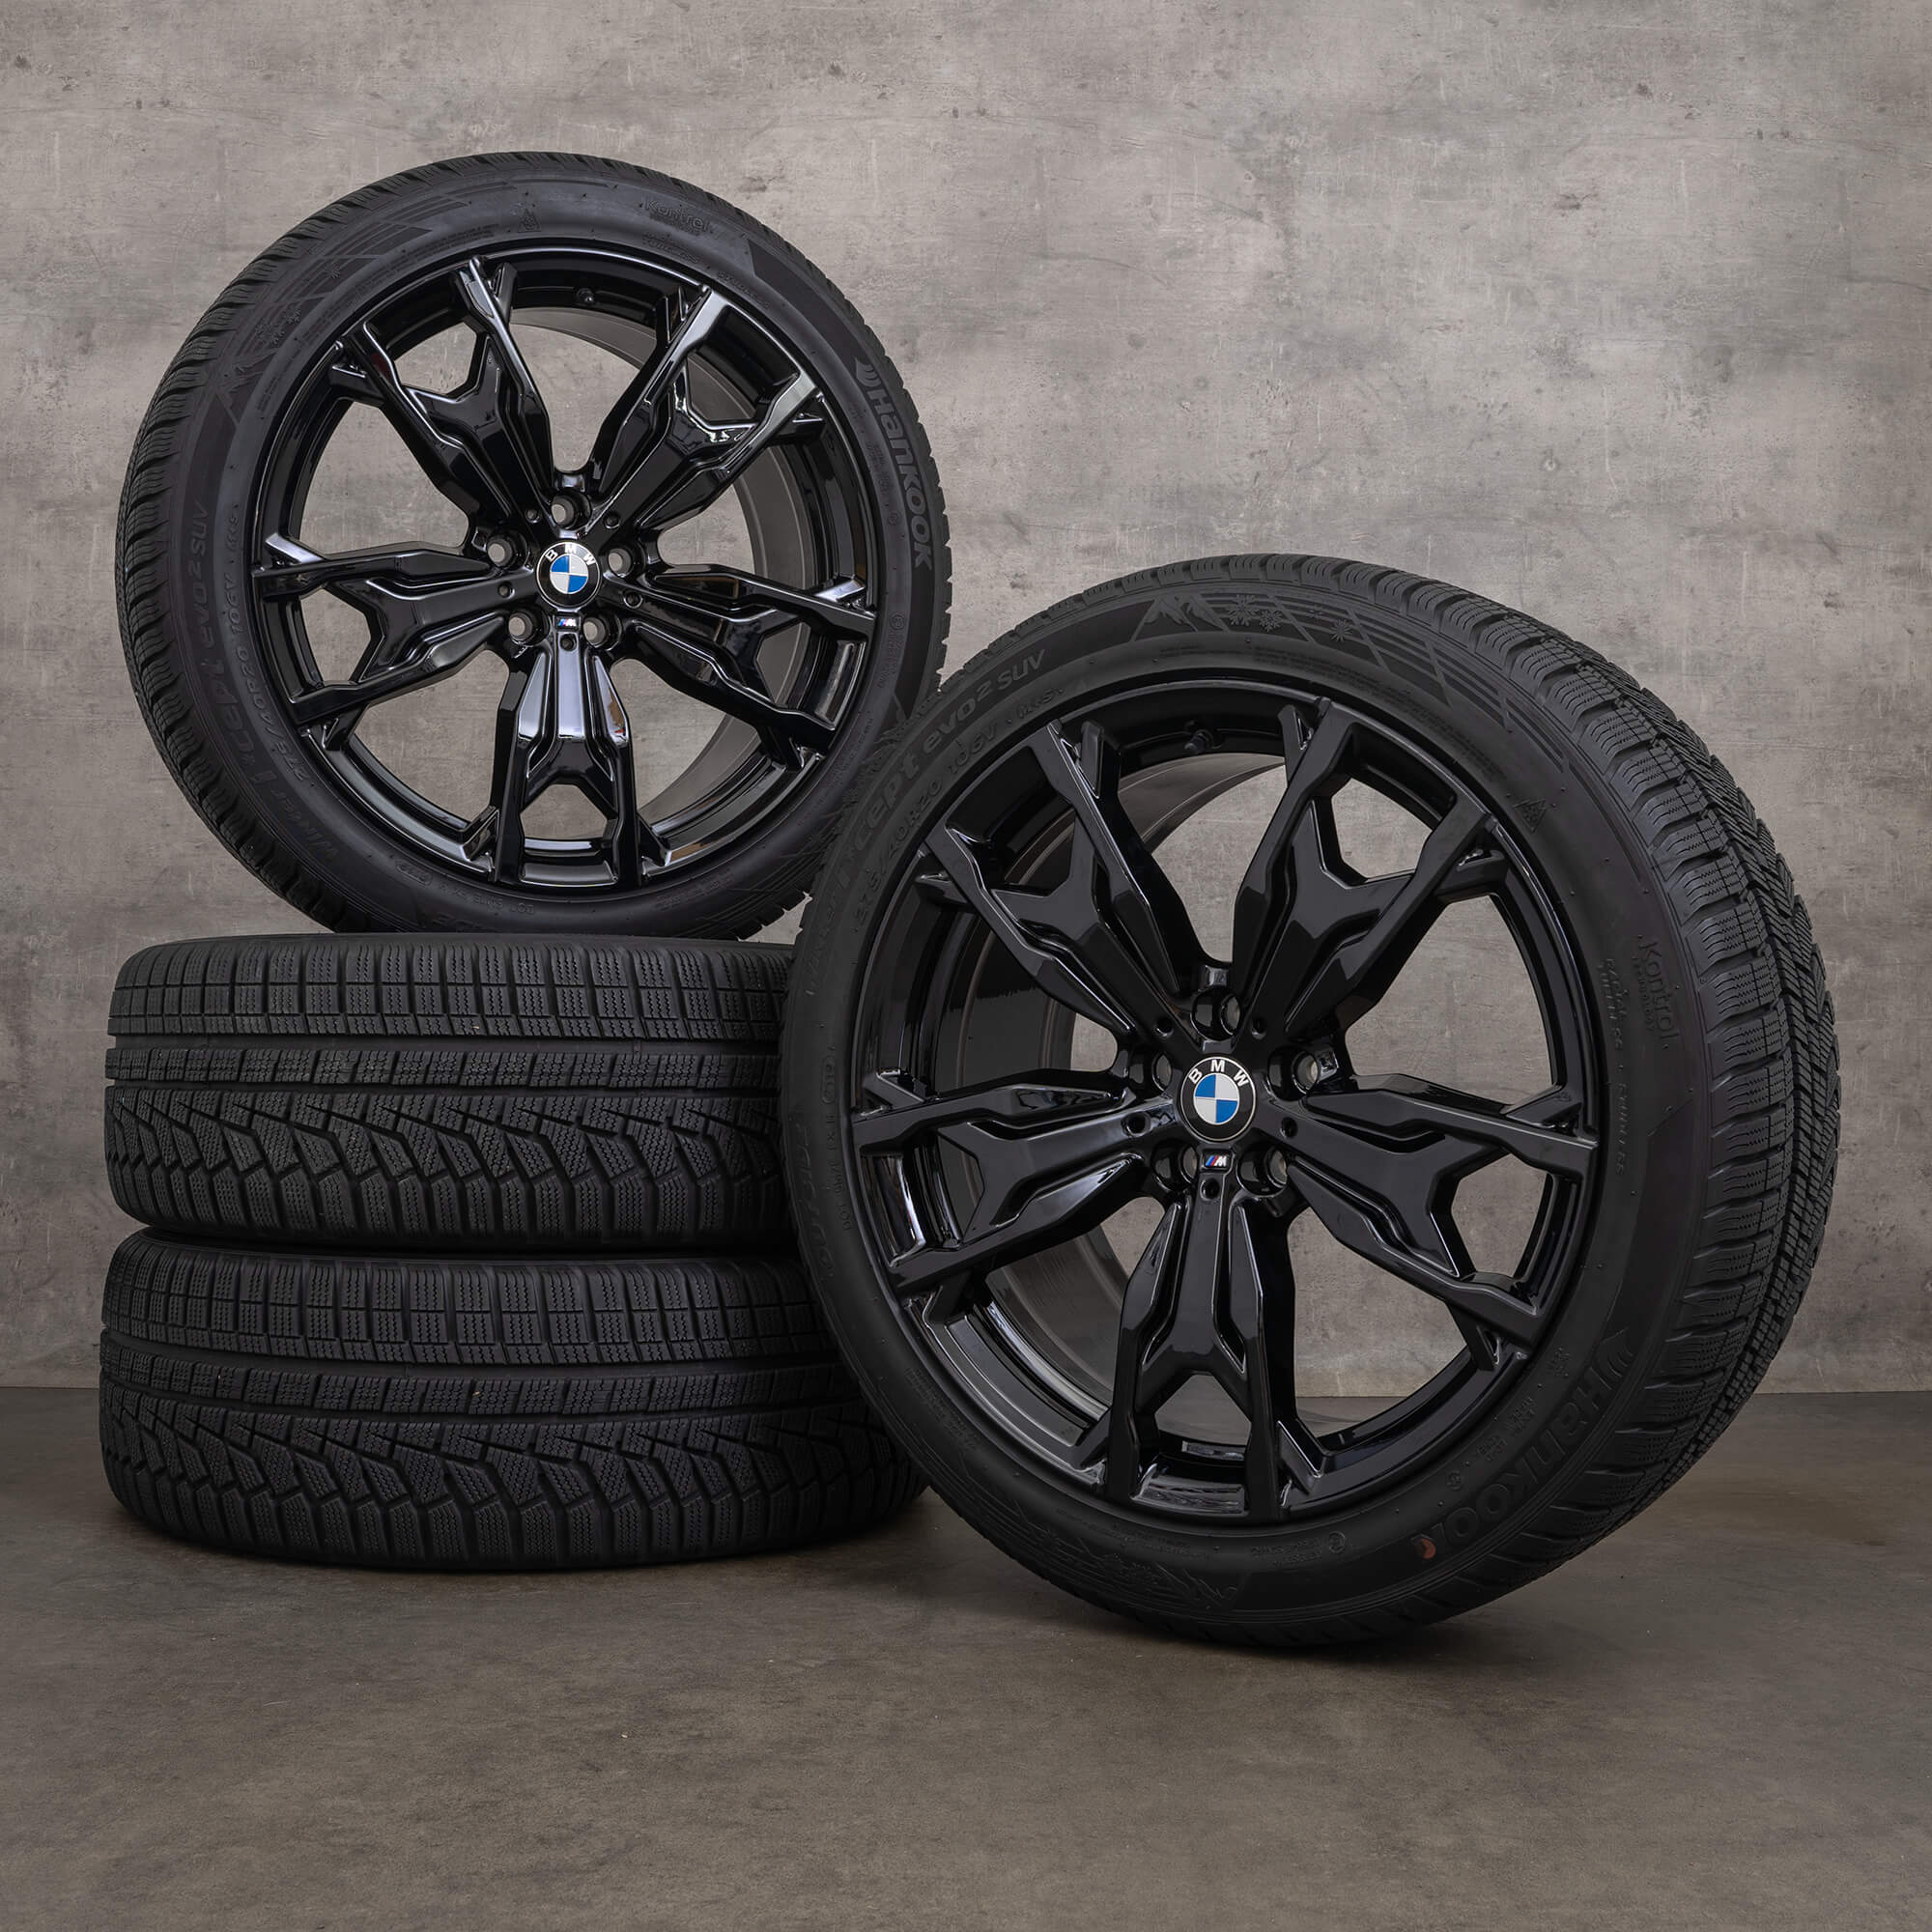 BMW X3 G01 X4 G02 winter wheels 20 inch rims tires aluminum 787 M